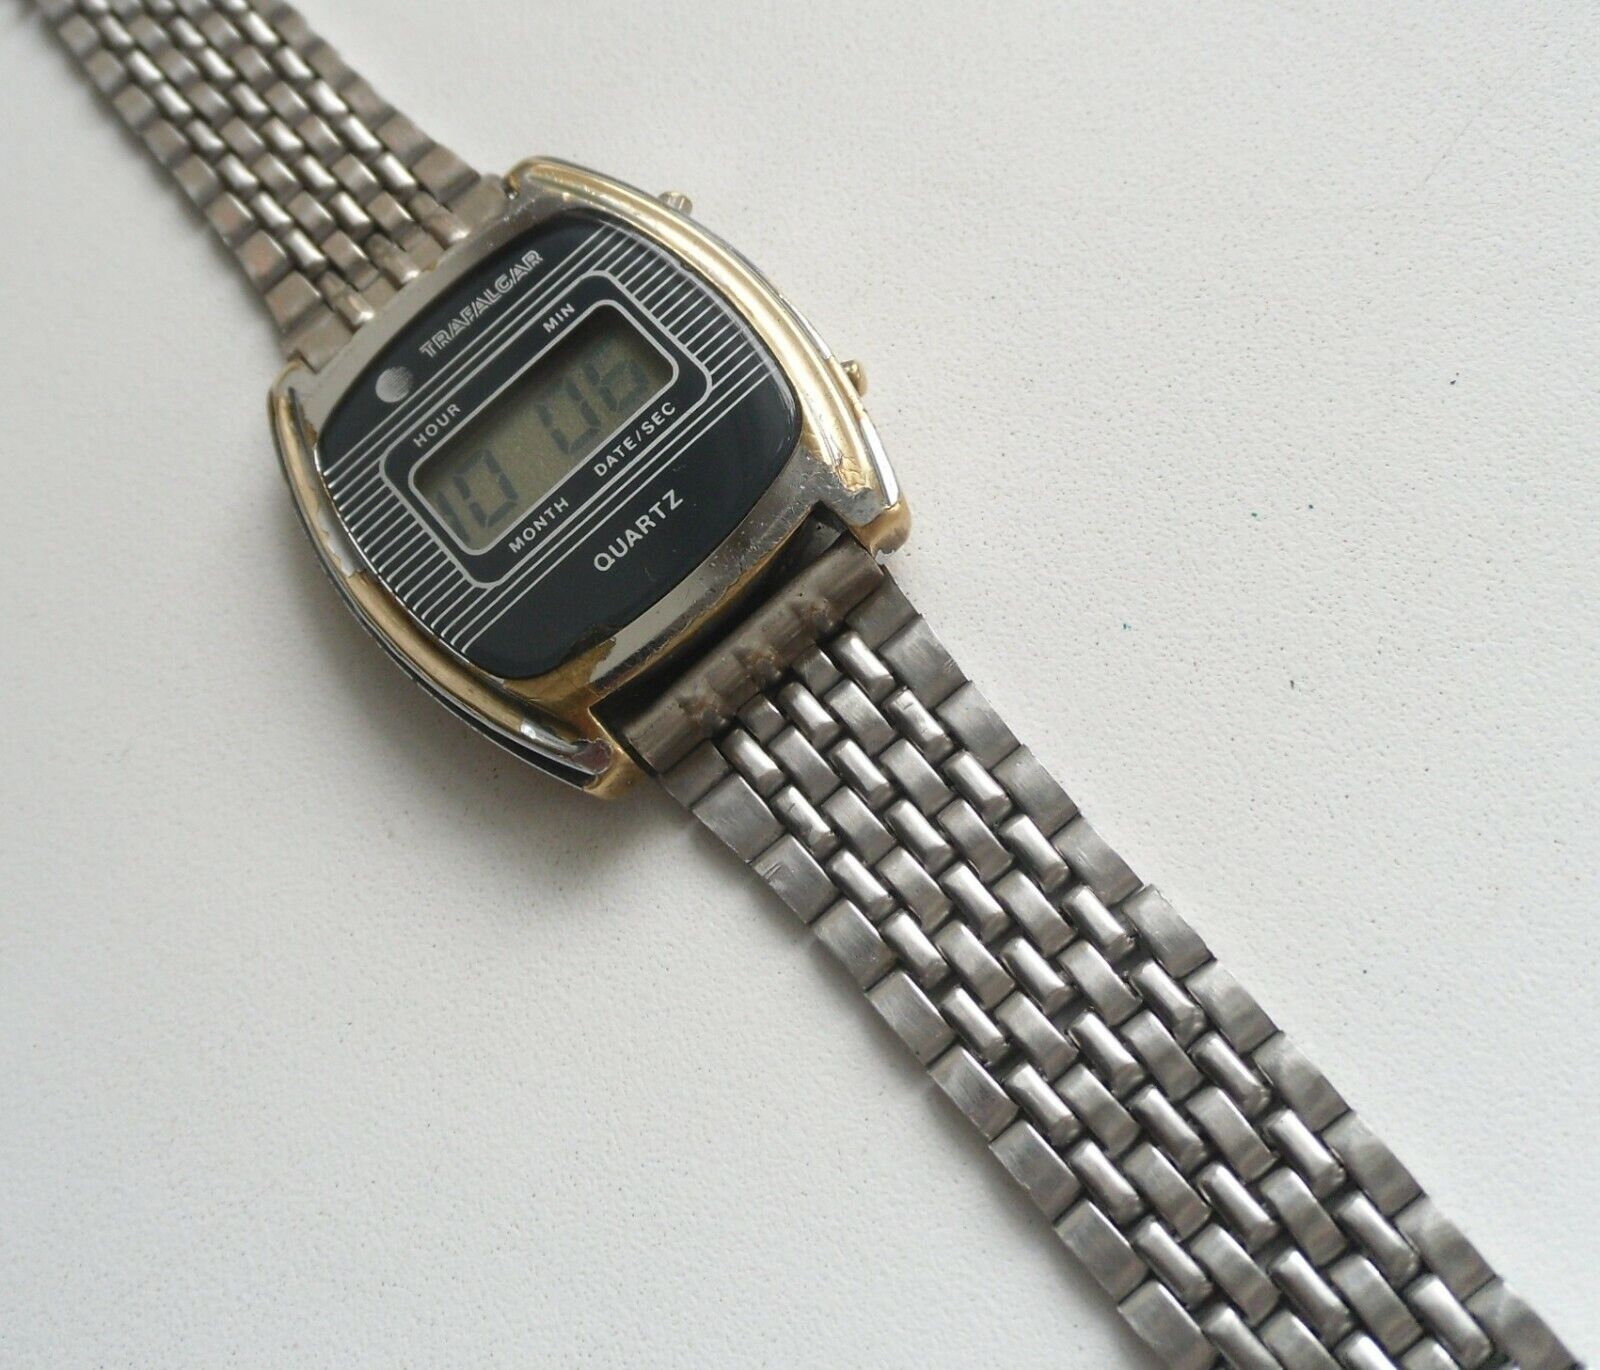 Trafalgar Quartz Vintage Original Digital Watch 1970s